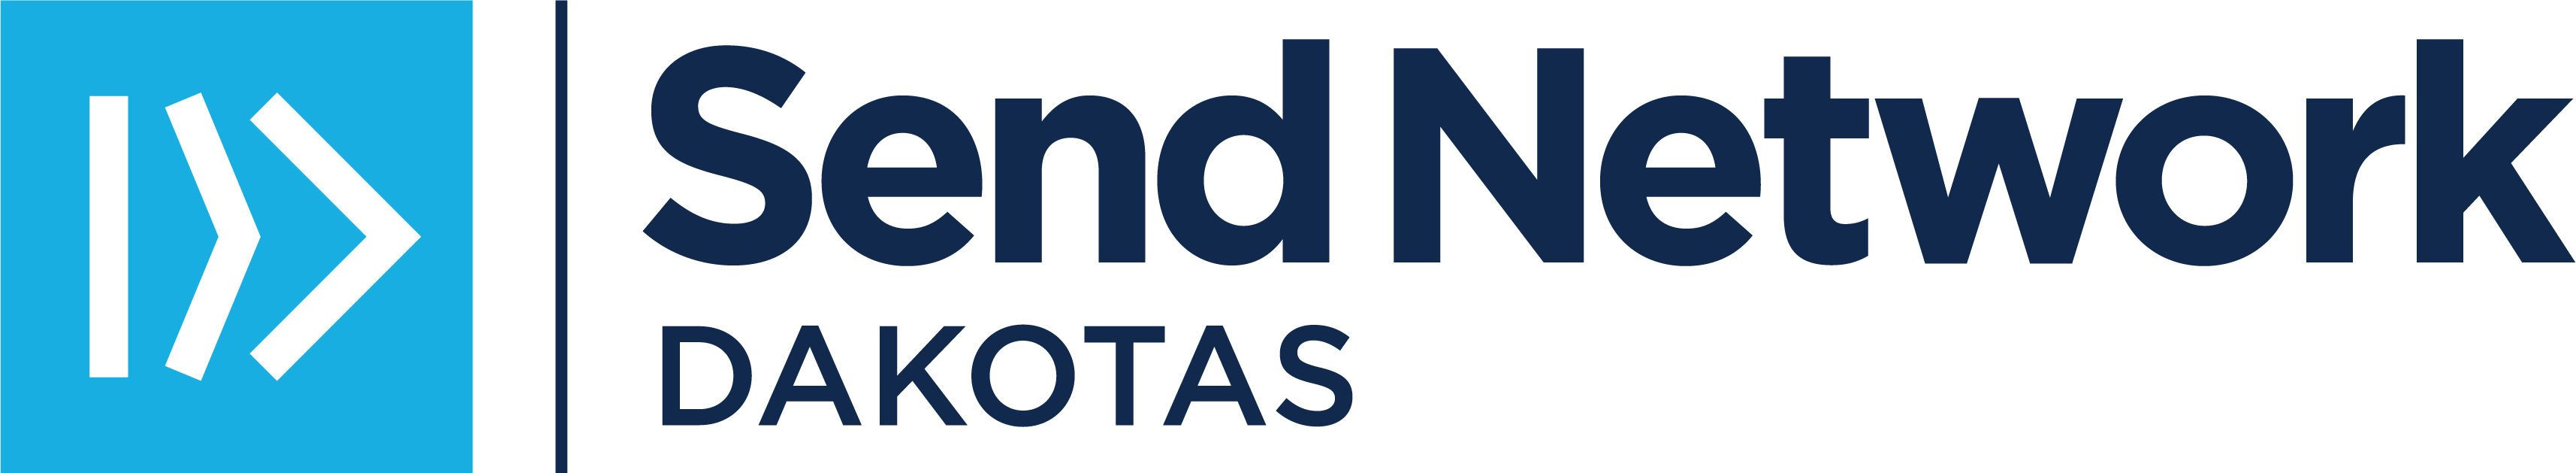 SN Dakotas Logo_BlueNavy